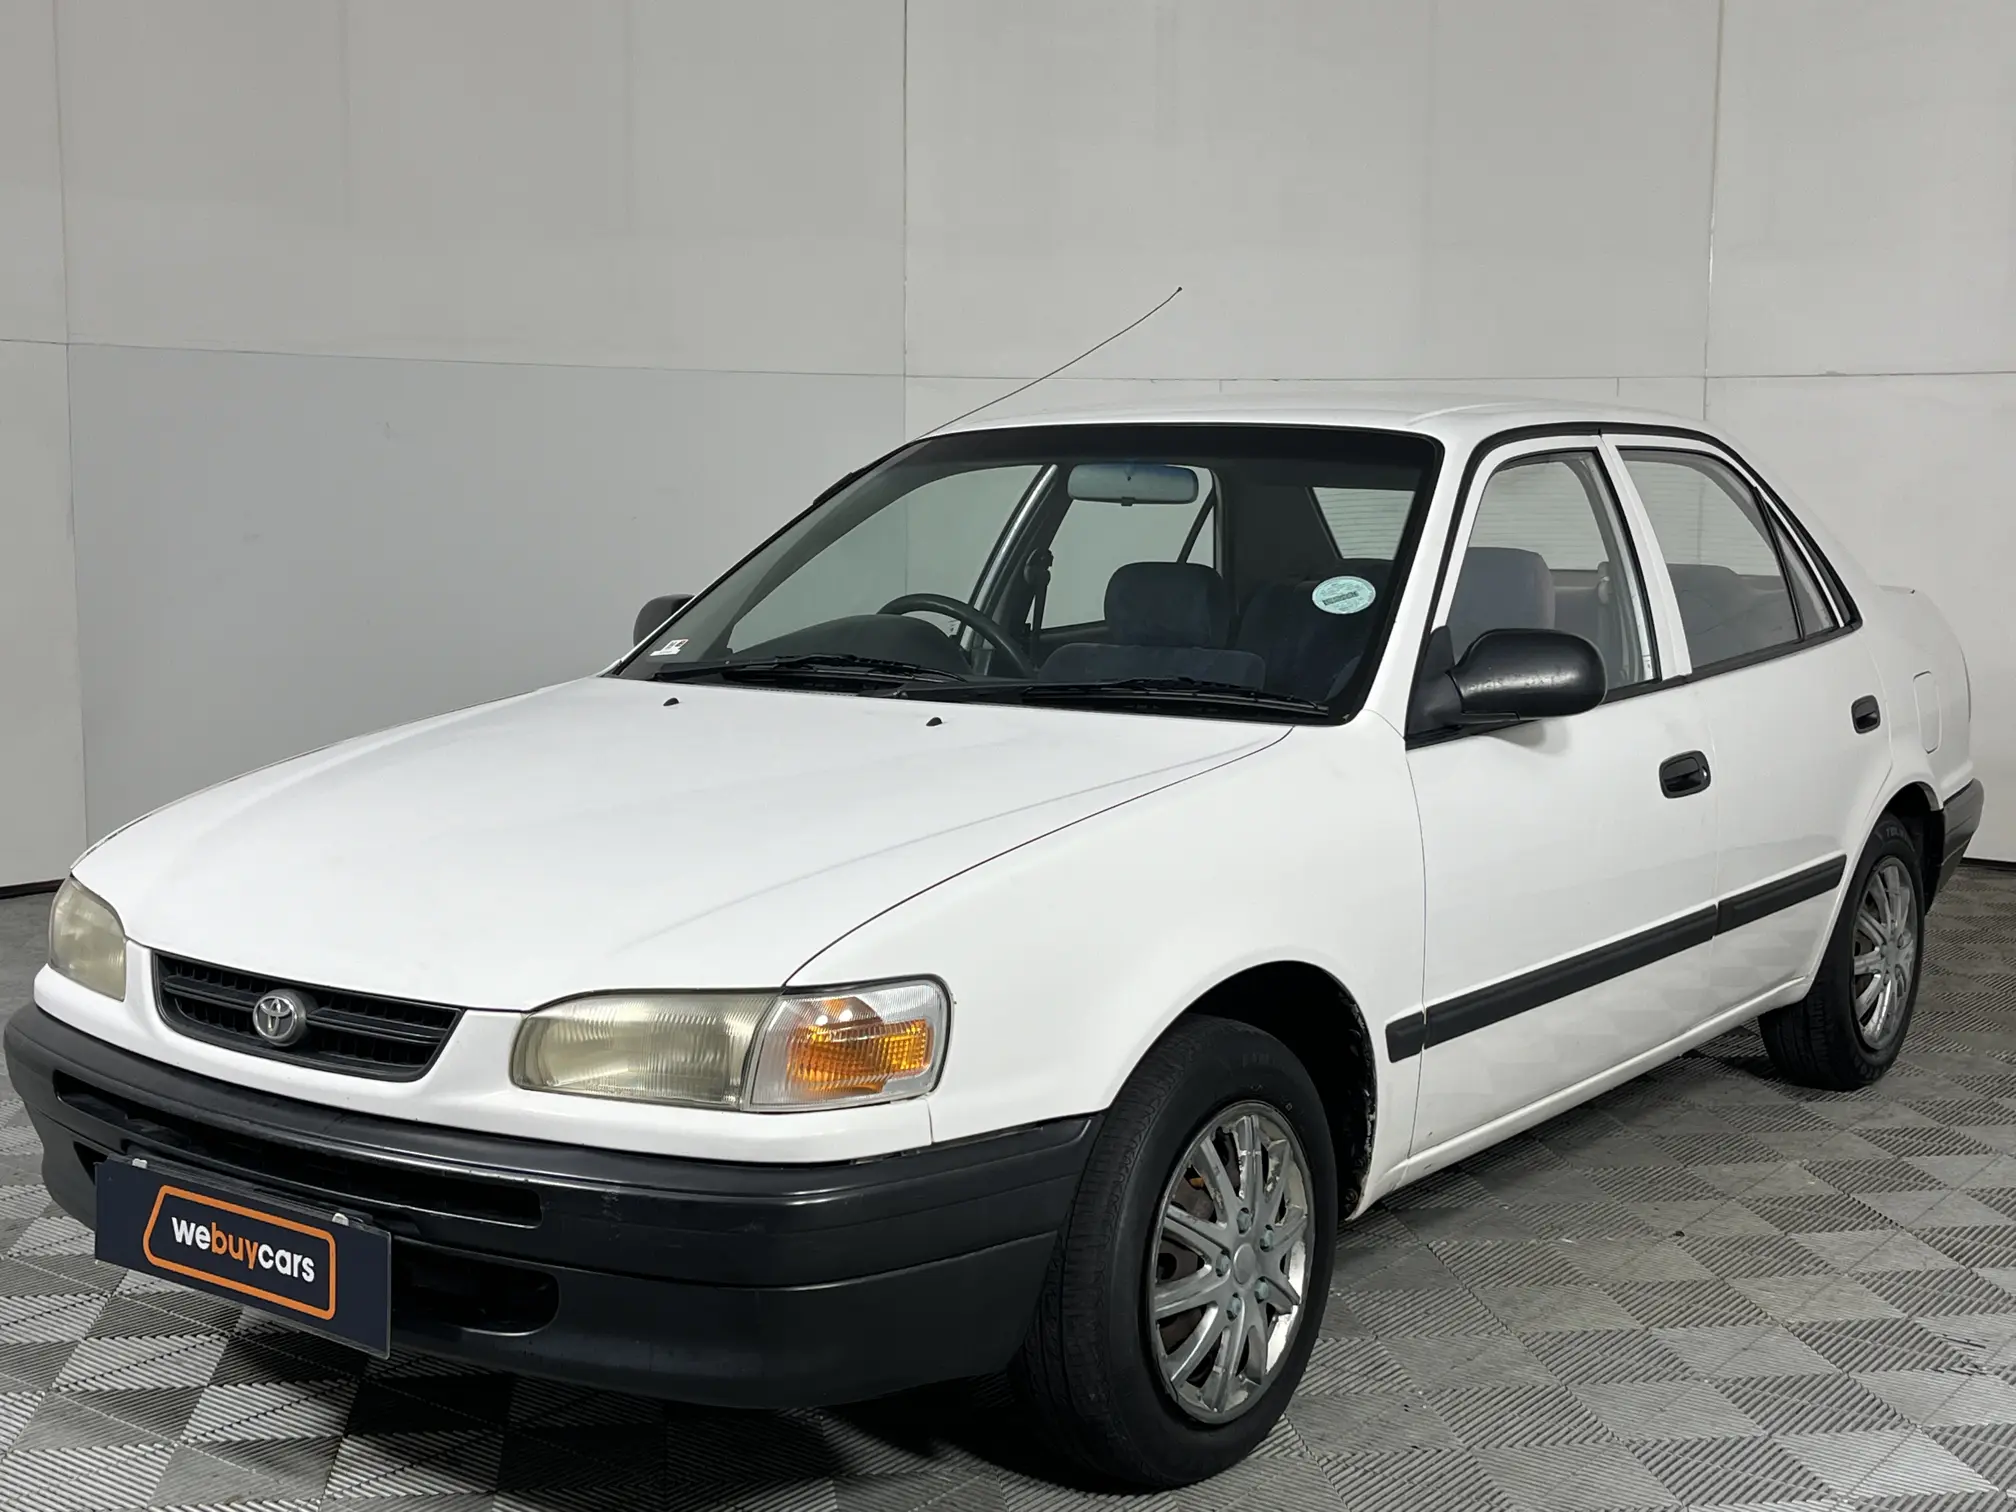 1996 Toyota Corolla 160i GL